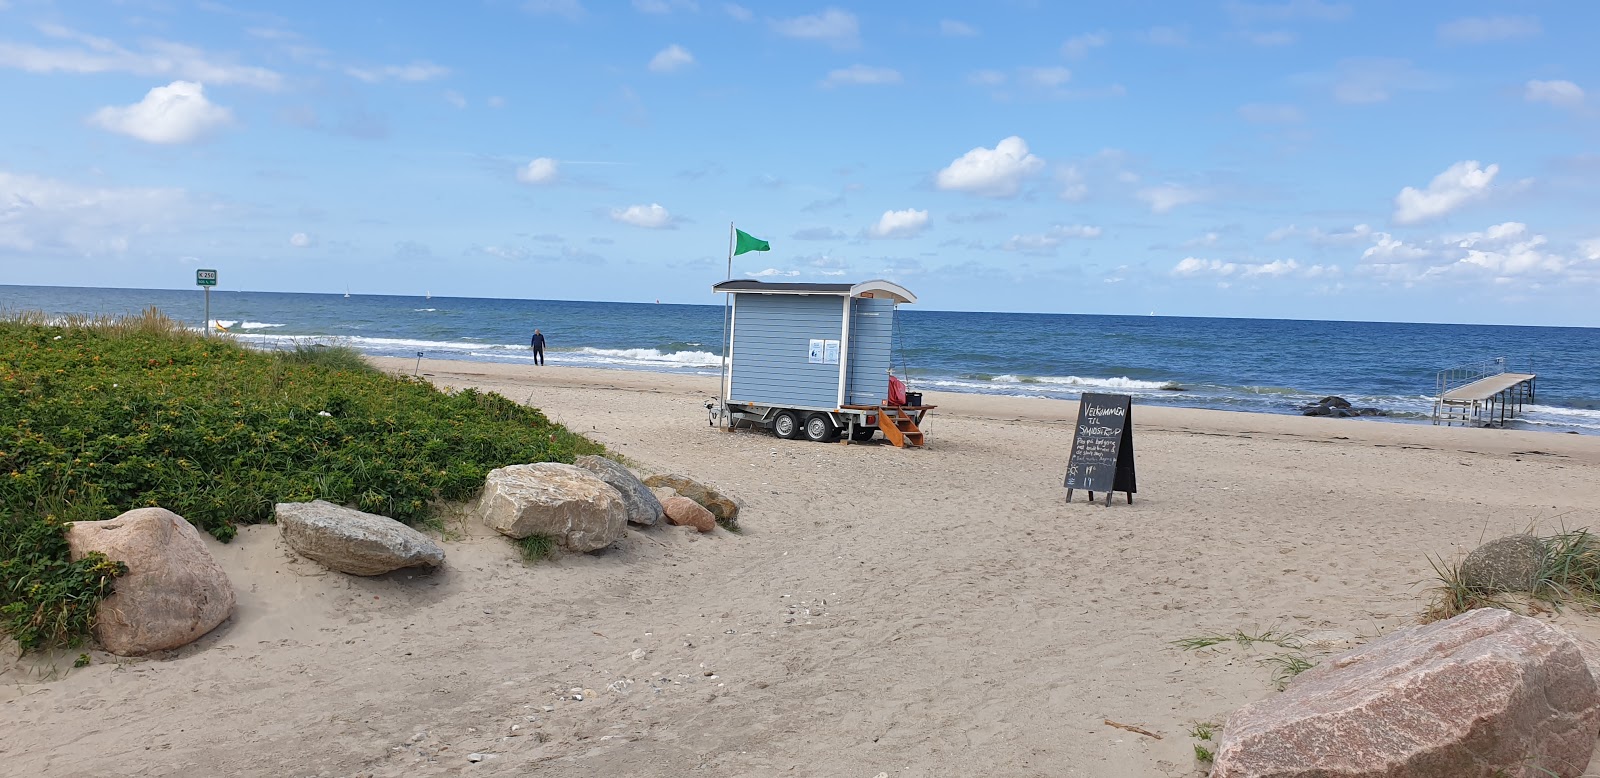 Foto av Smidstrup Beach med hög nivå av renlighet